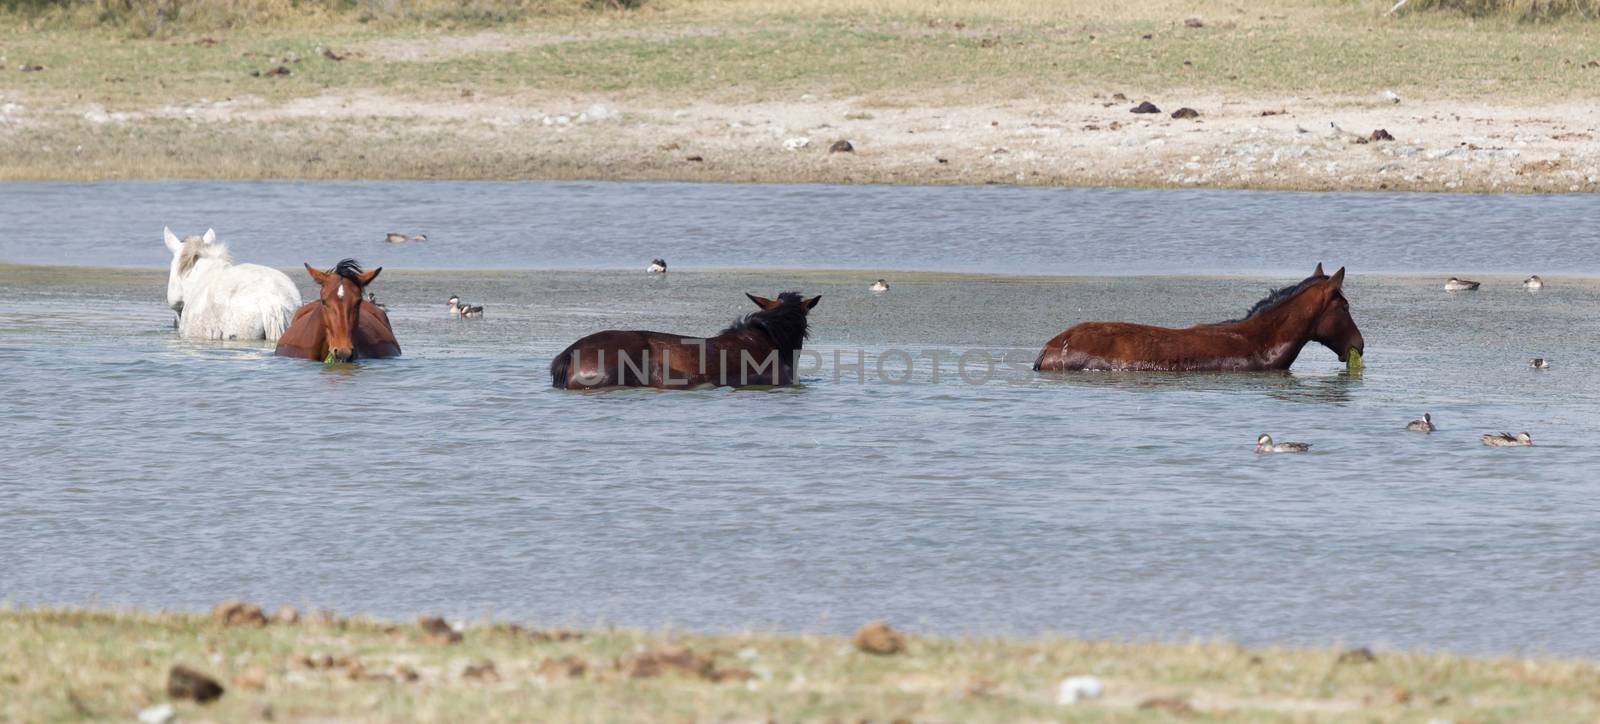 Horses bathing in a small lake - Botswana